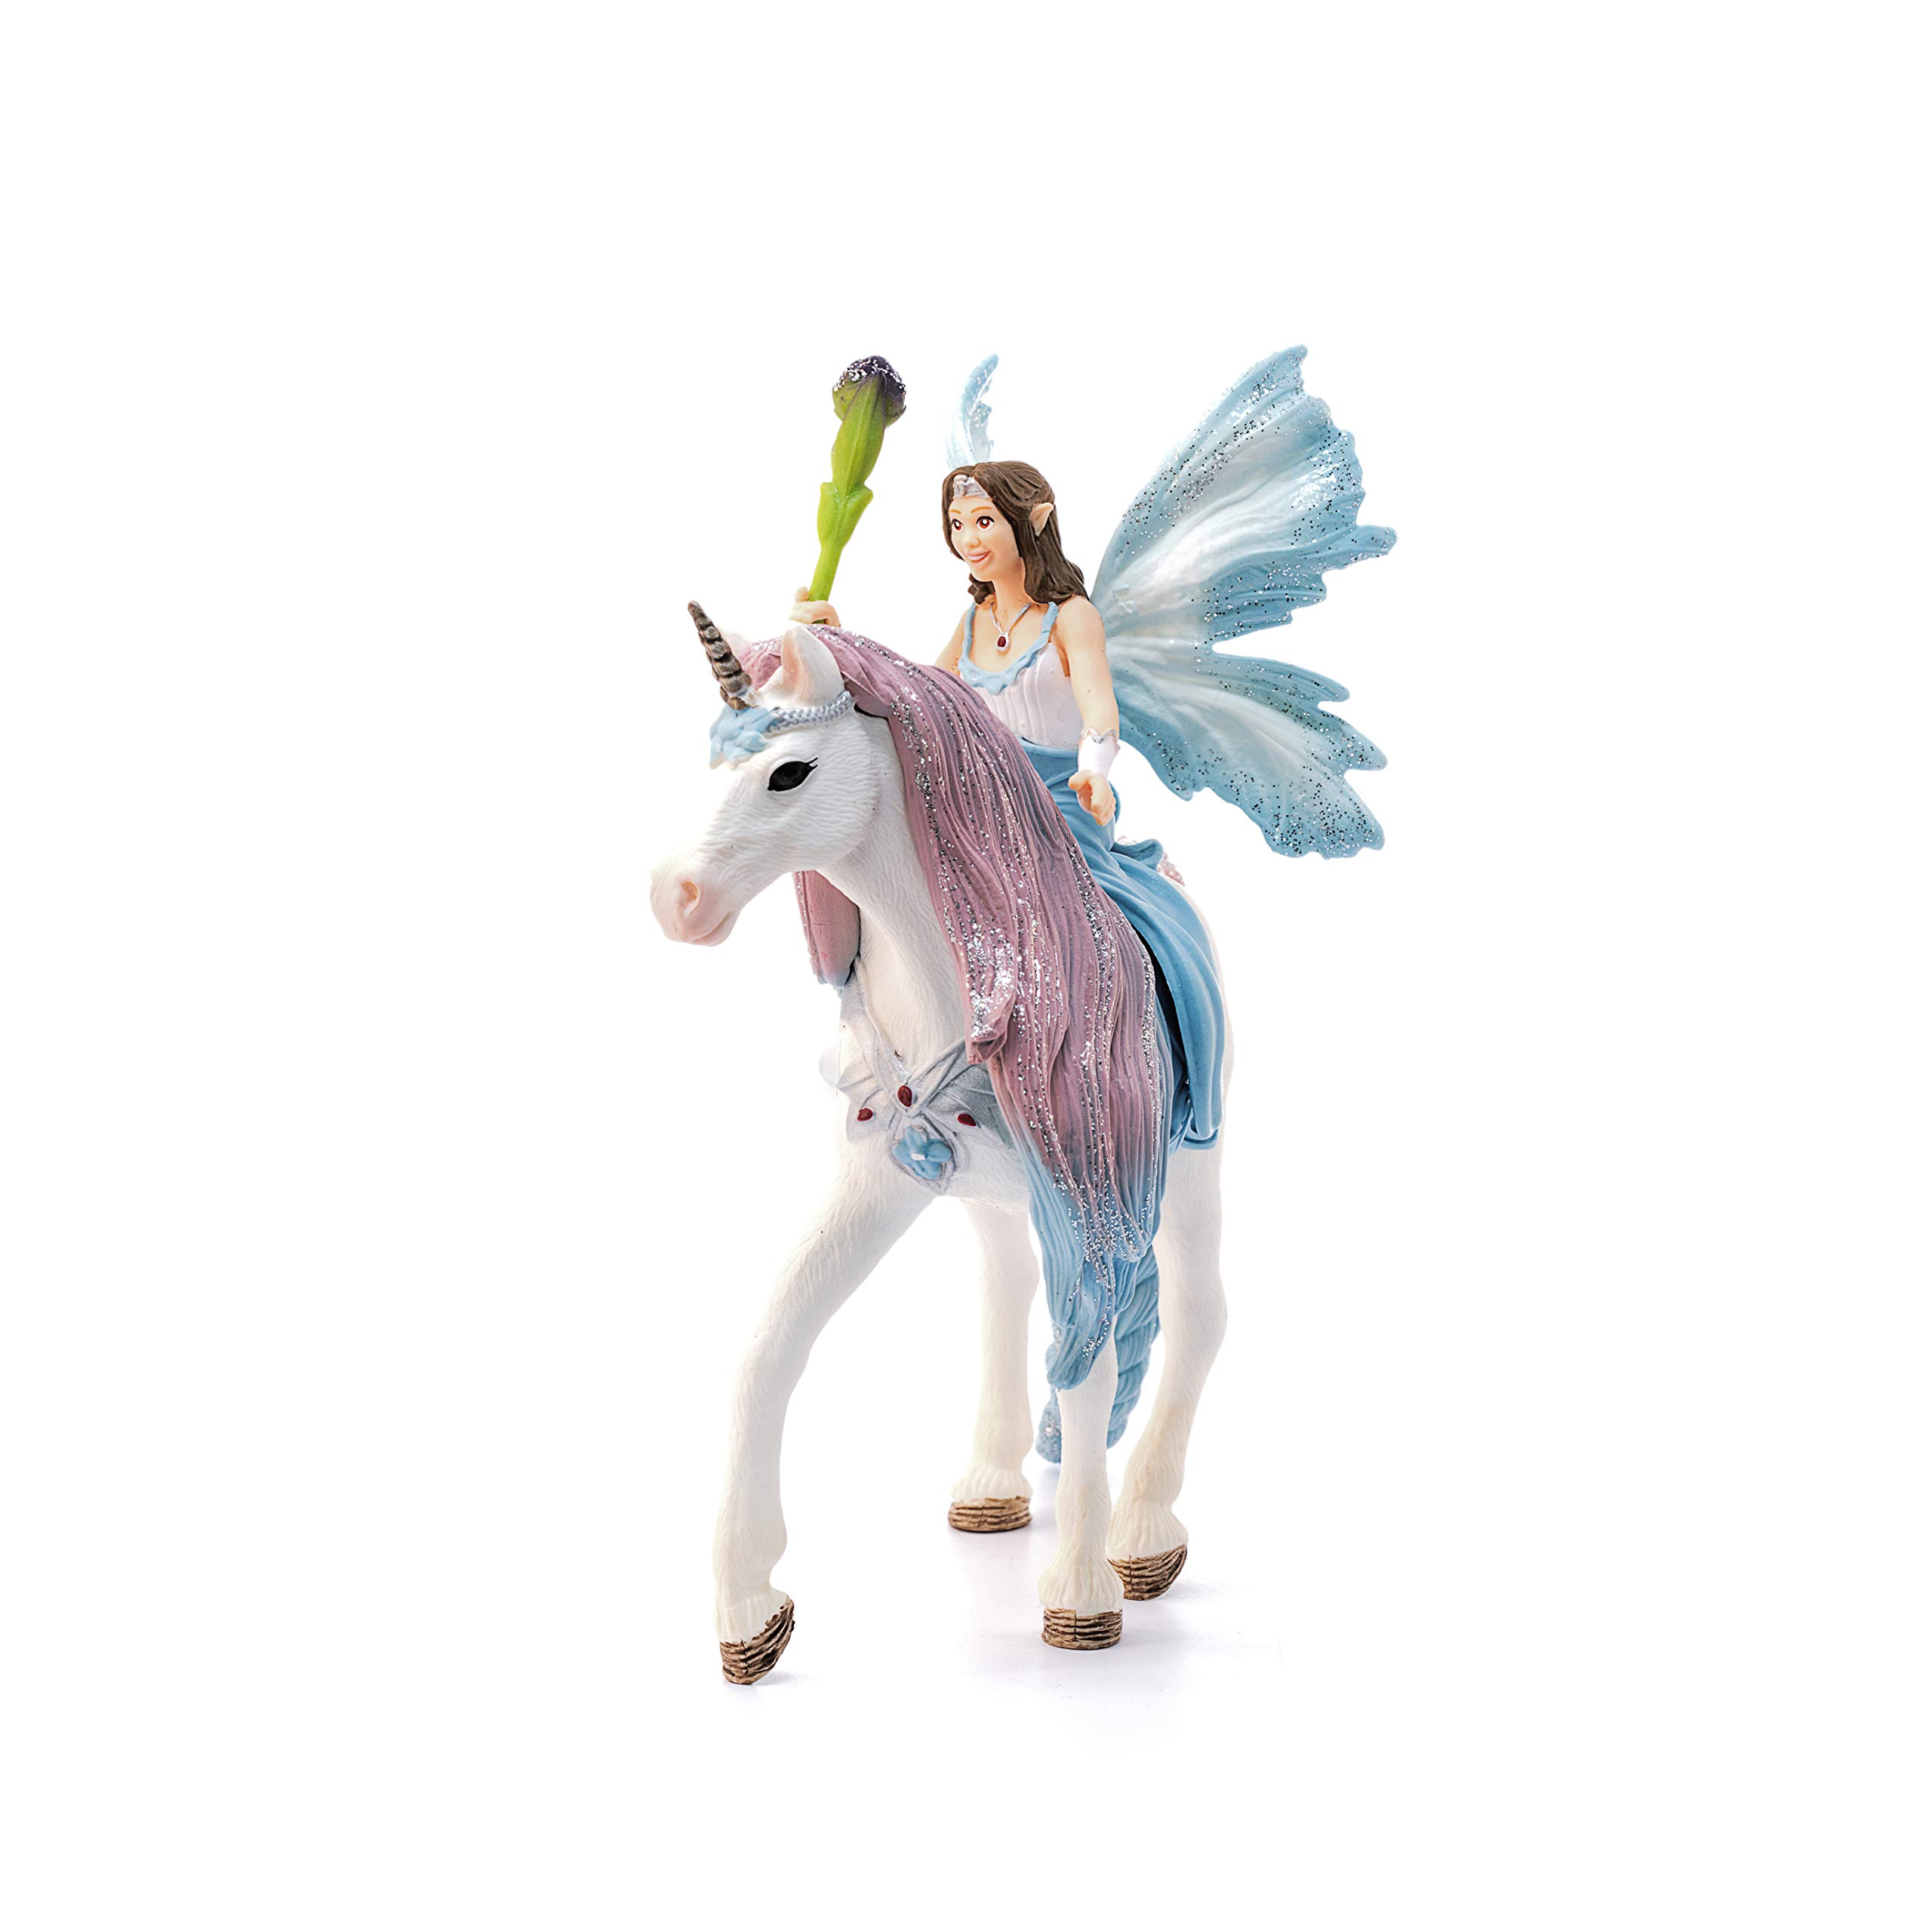 Schleich bayala, 3-Piece Playset, Unicorn Toys for Girls and Boys 5-12 Years Old, Fairy Eyela with Princess Unicorn